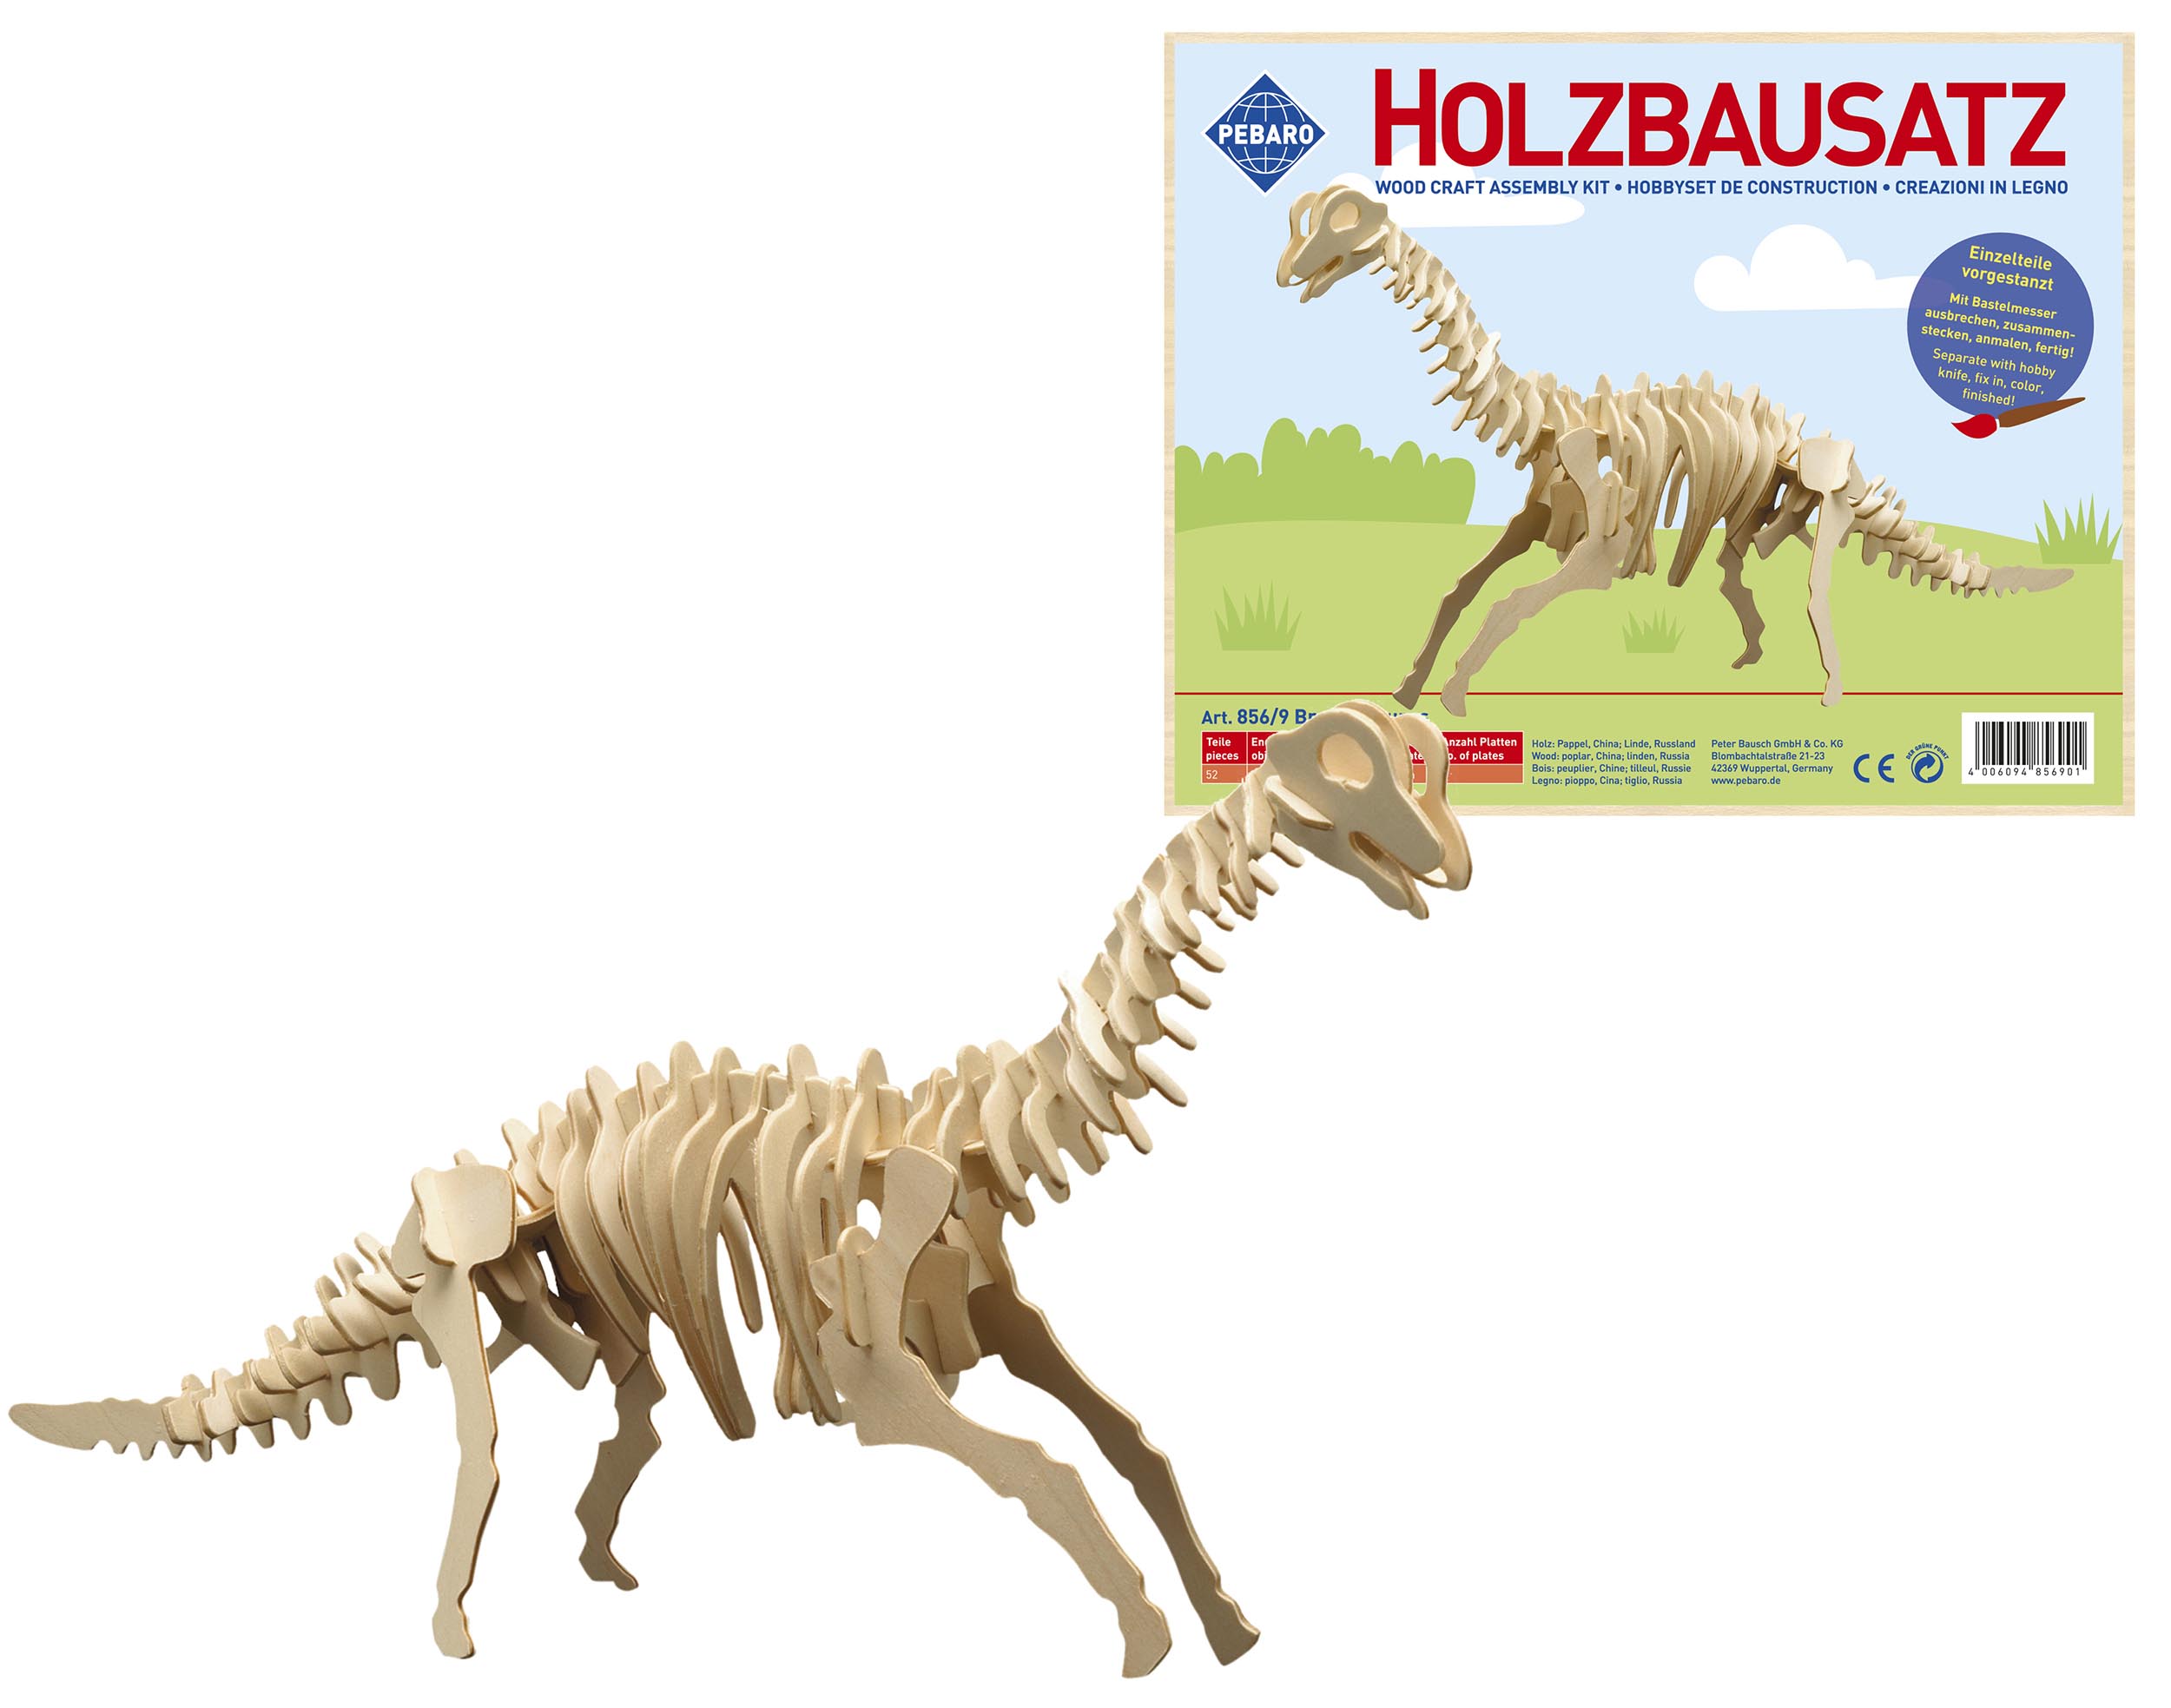 Pebaro Holzbausatz Brachiosaurus.